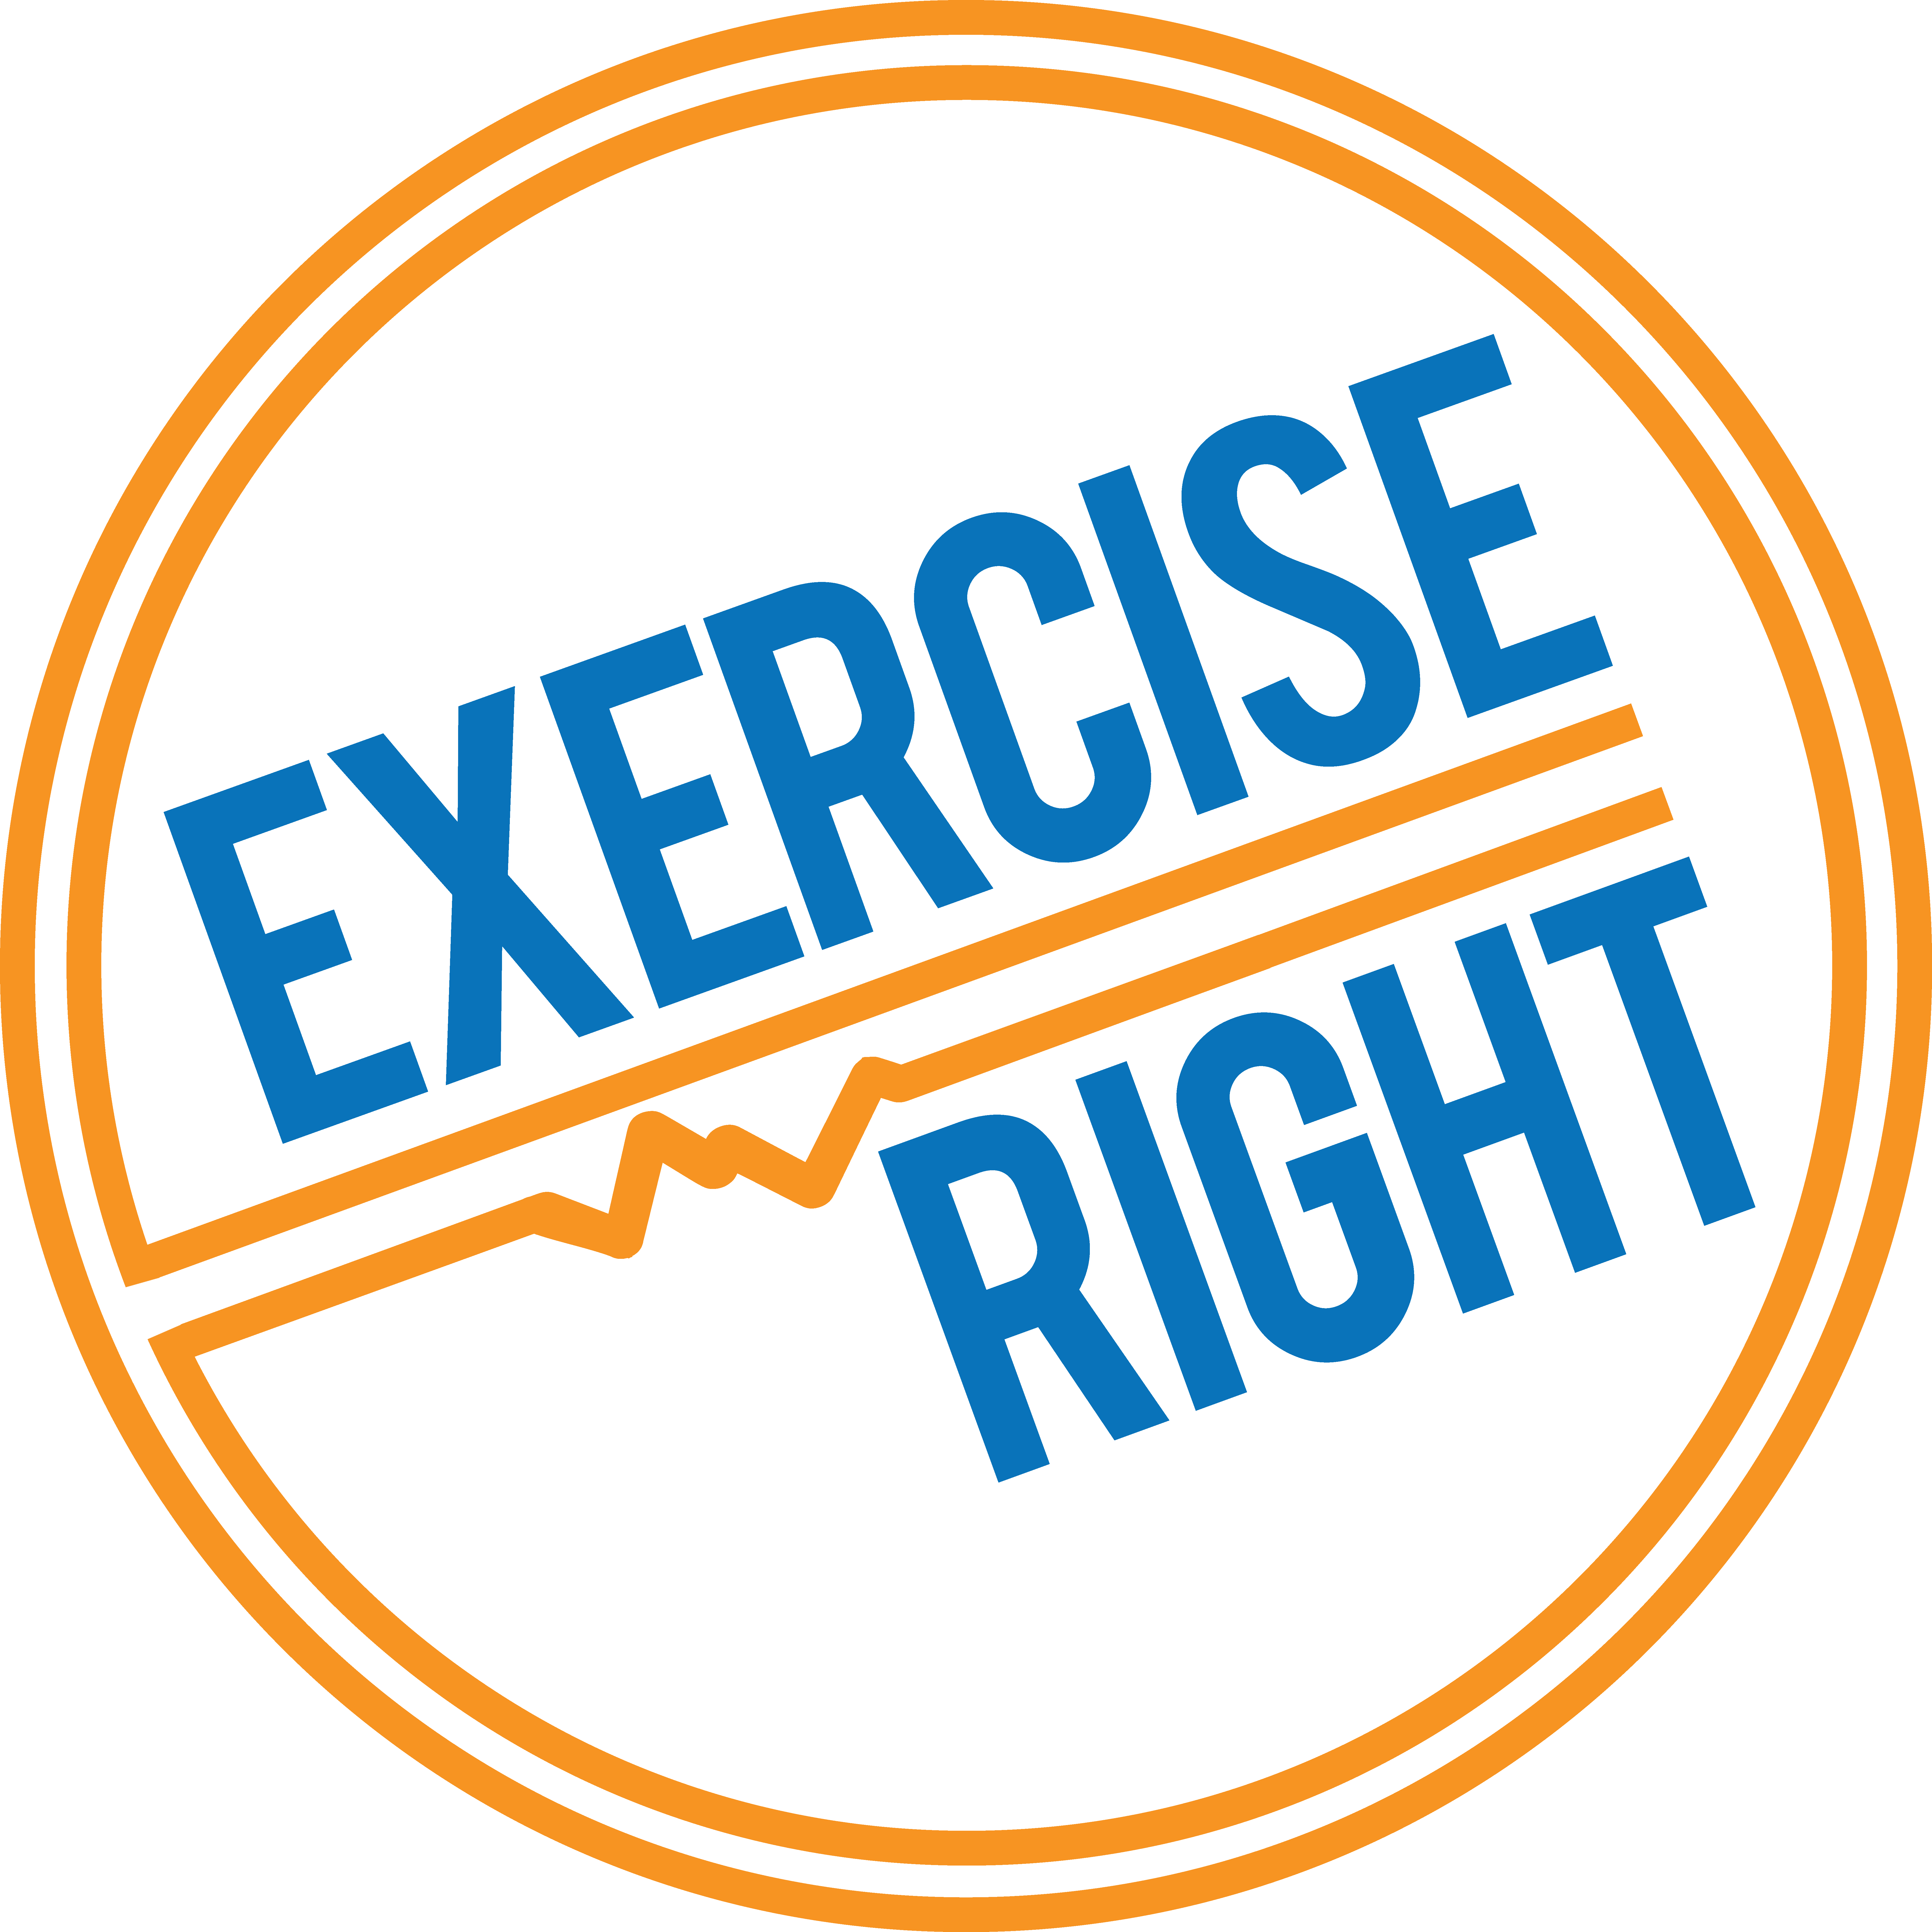 Exercise Right Week logo 